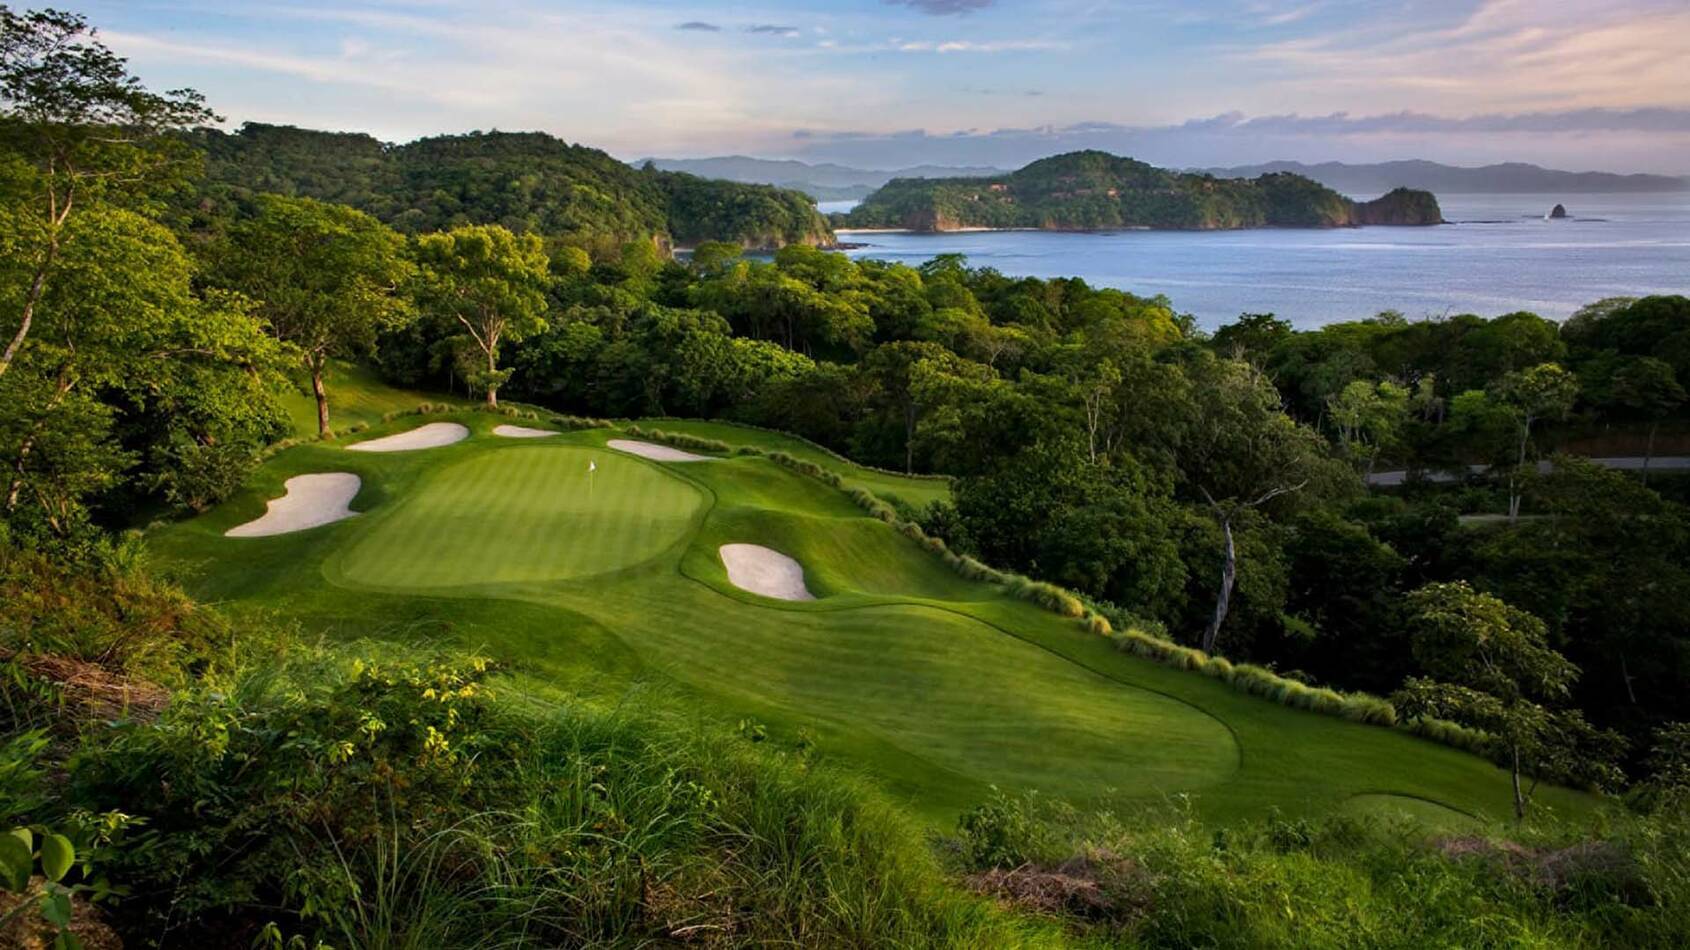 Costa Rica Four Seasons Papagayo parcours golf